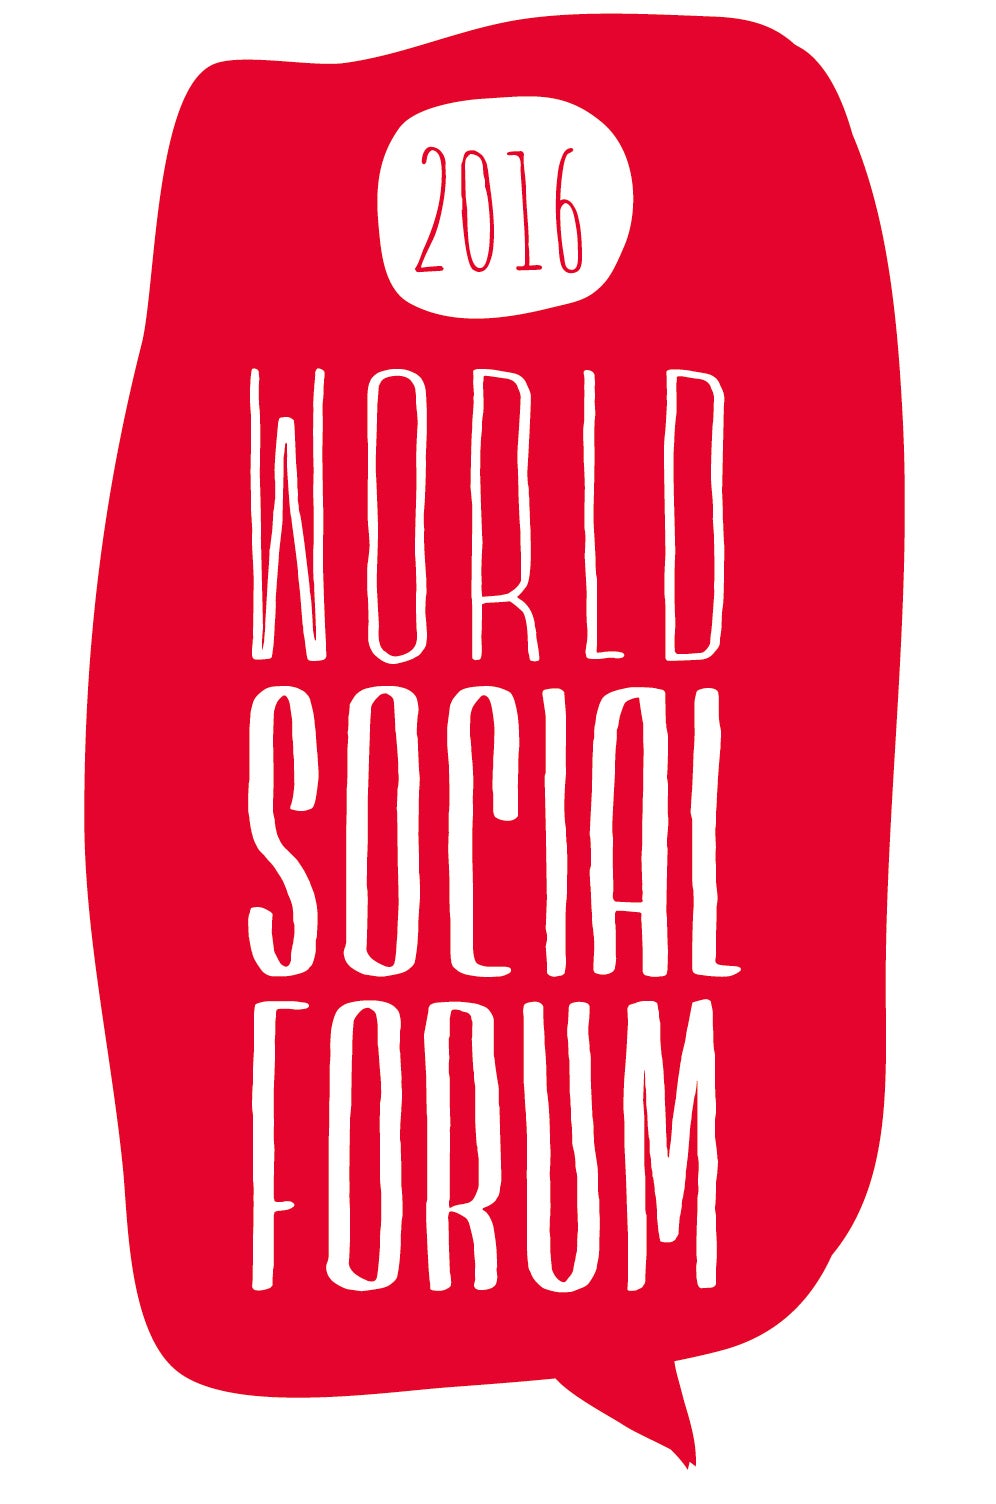 World social forum  logo